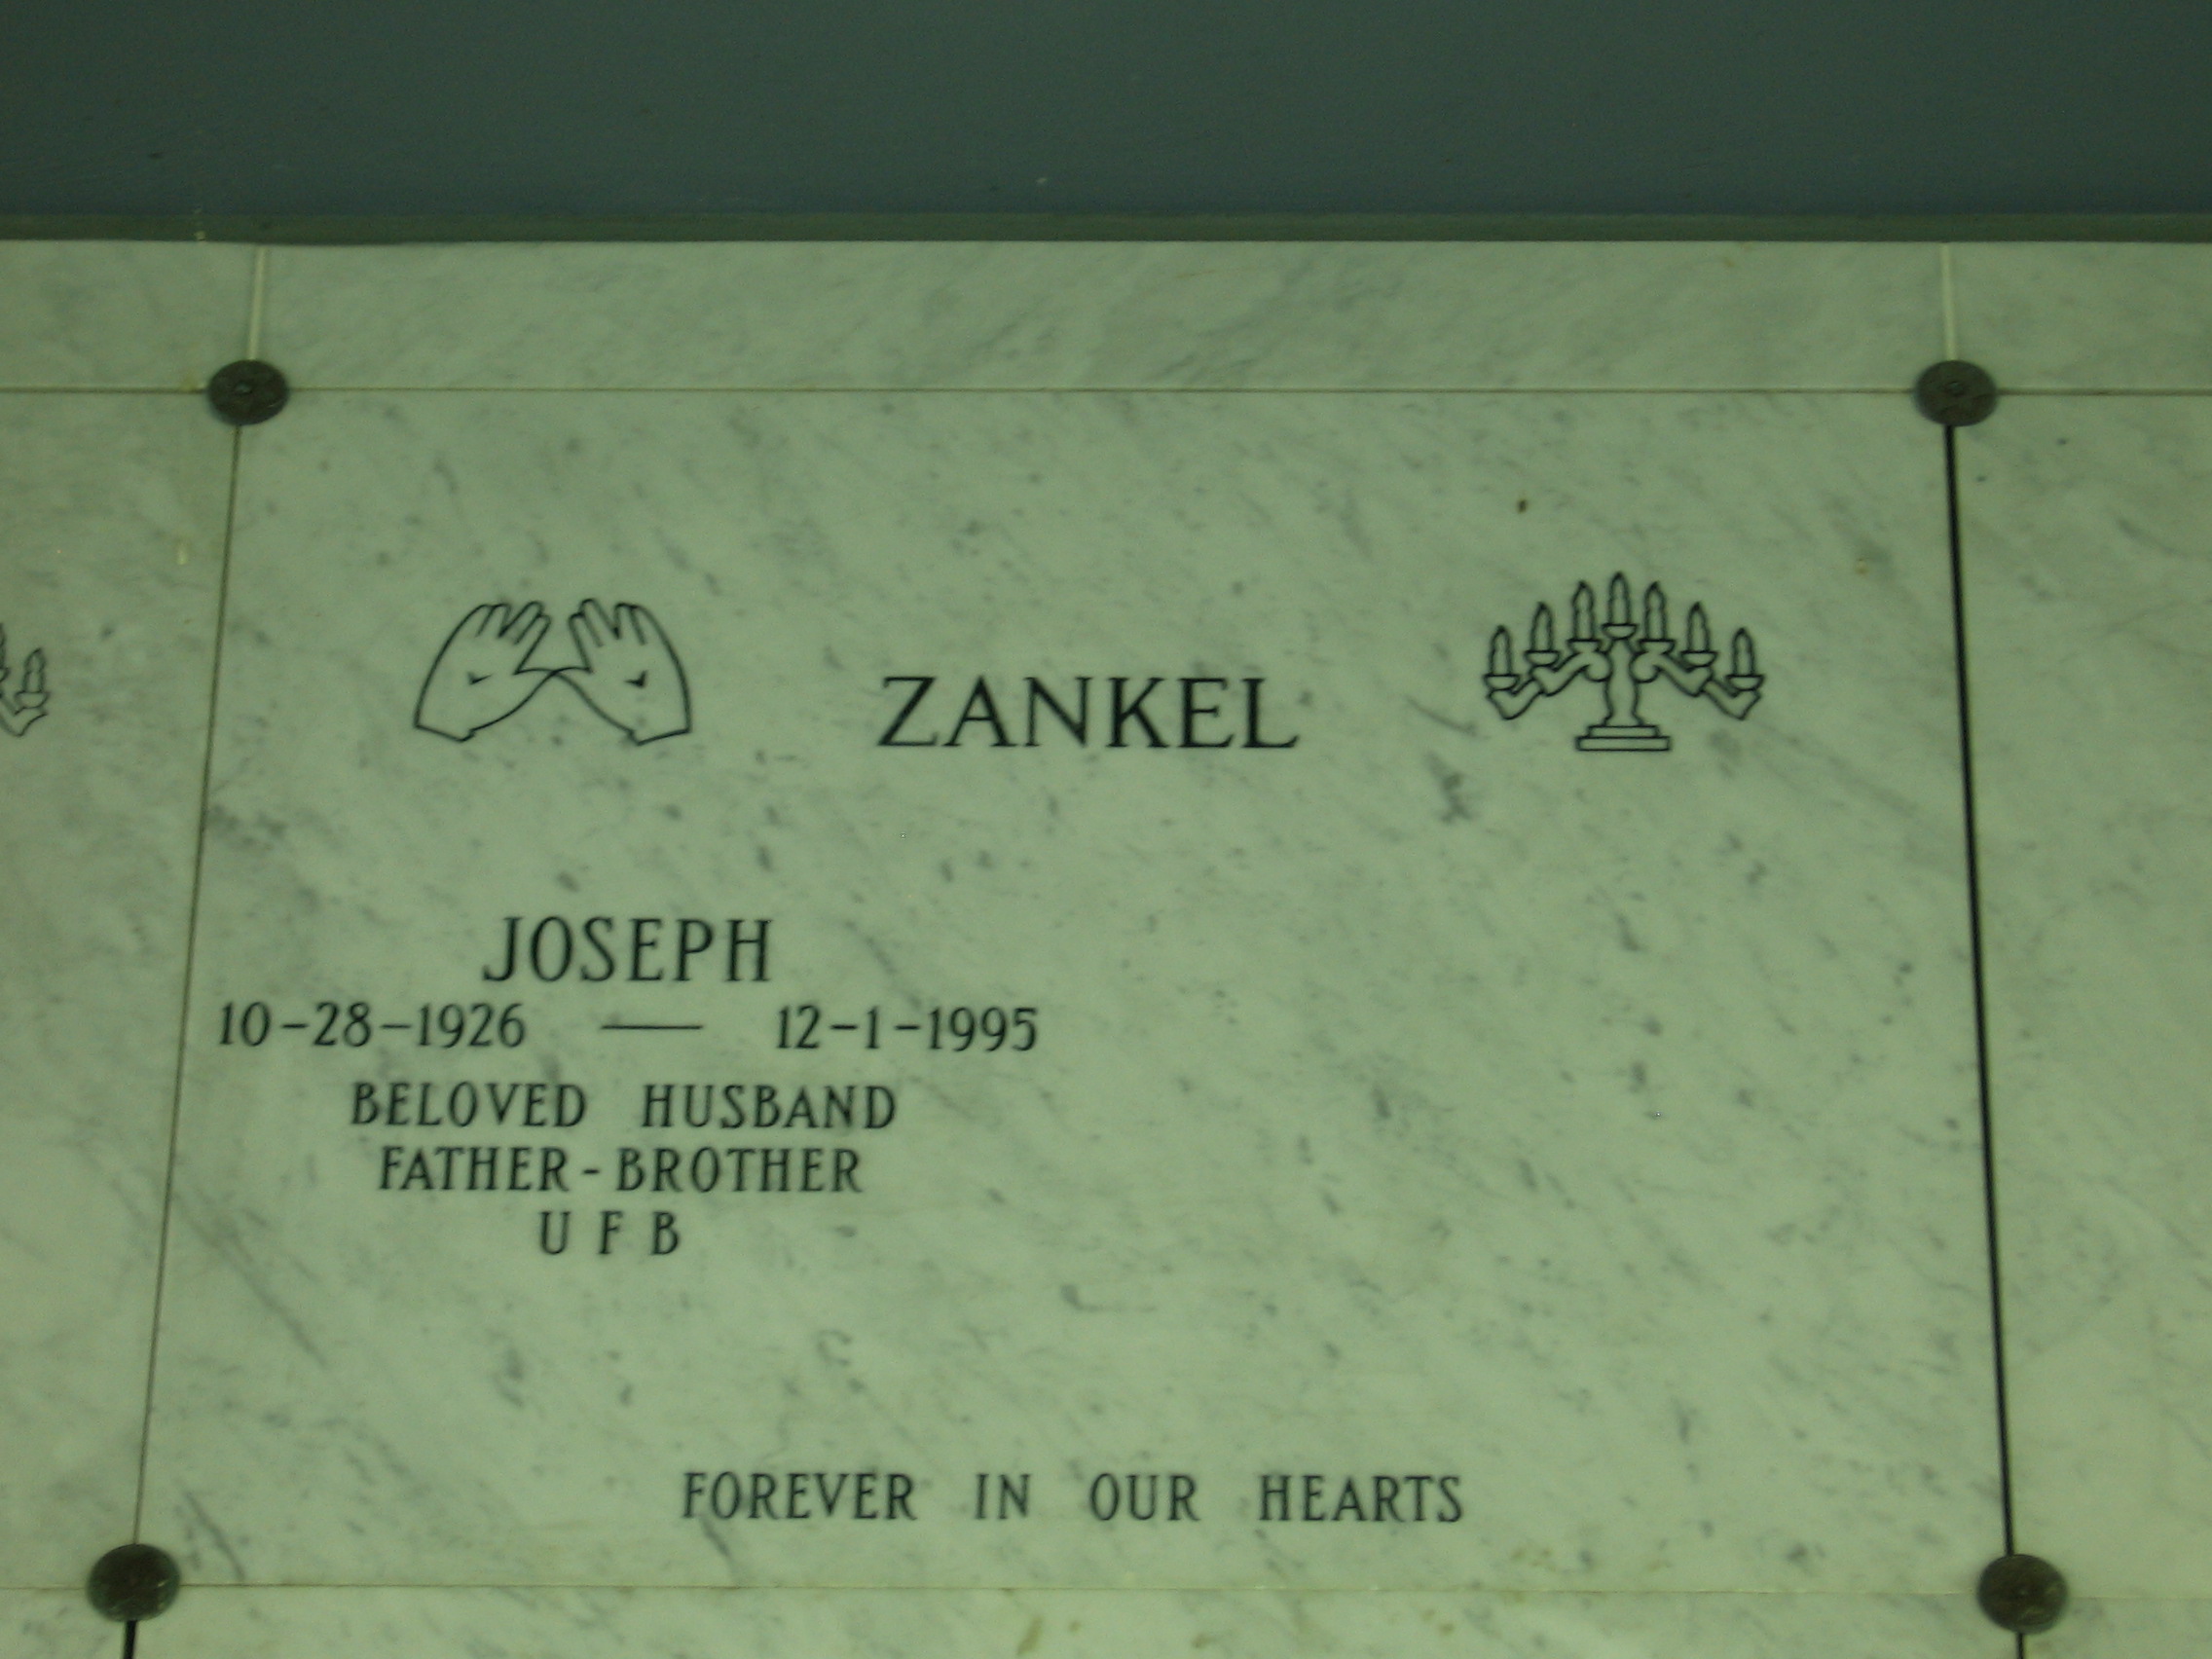 Joseph Zankel